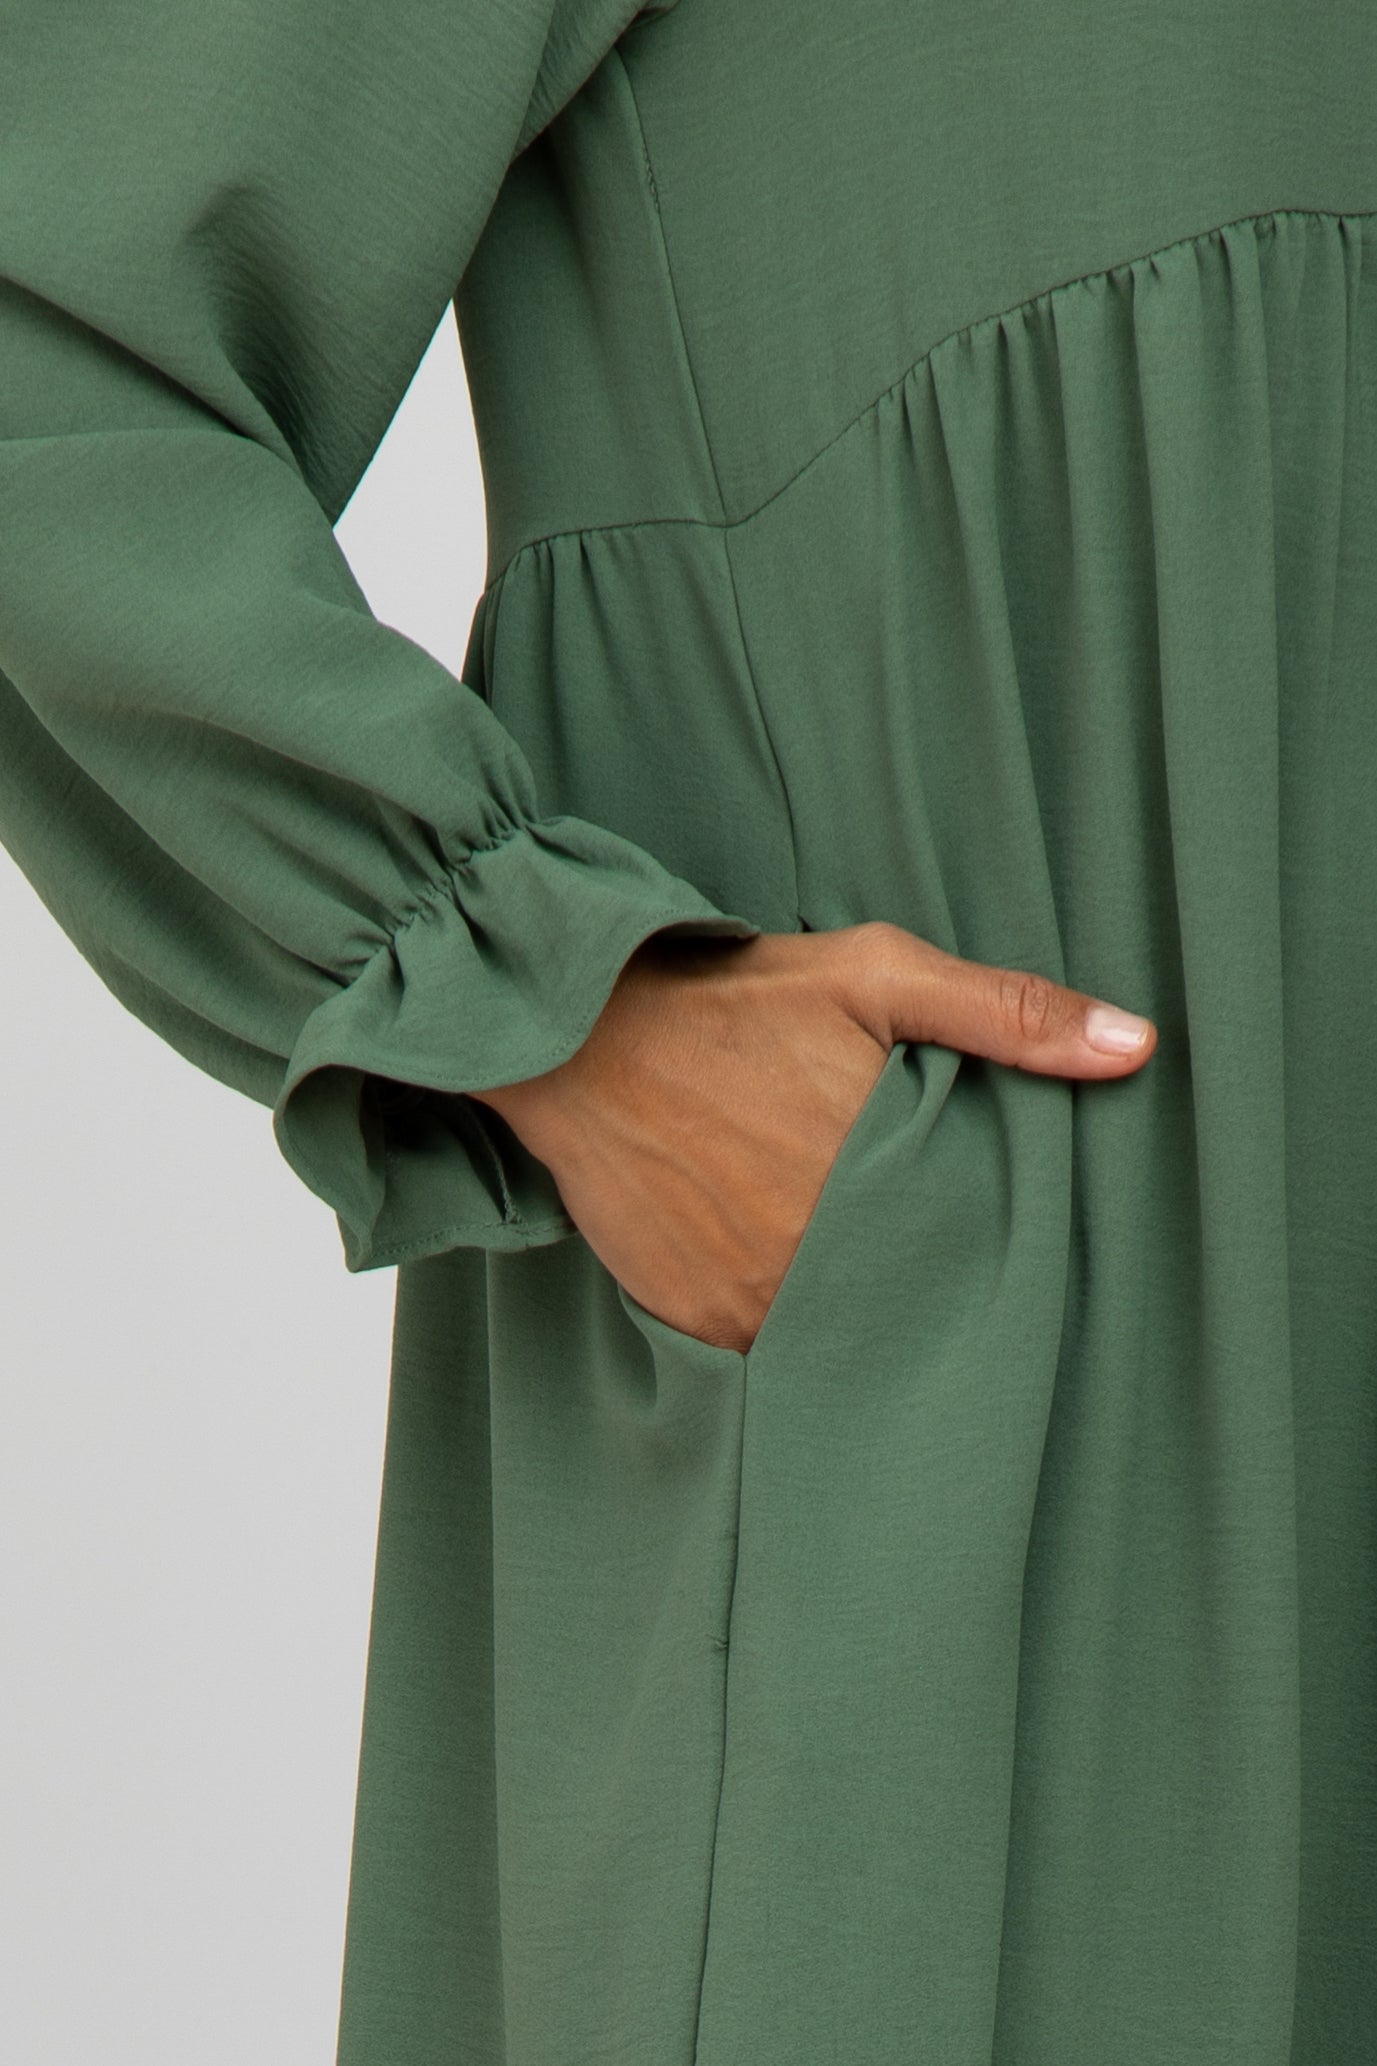 Green Ruffle Trim Long Sleeve Dress